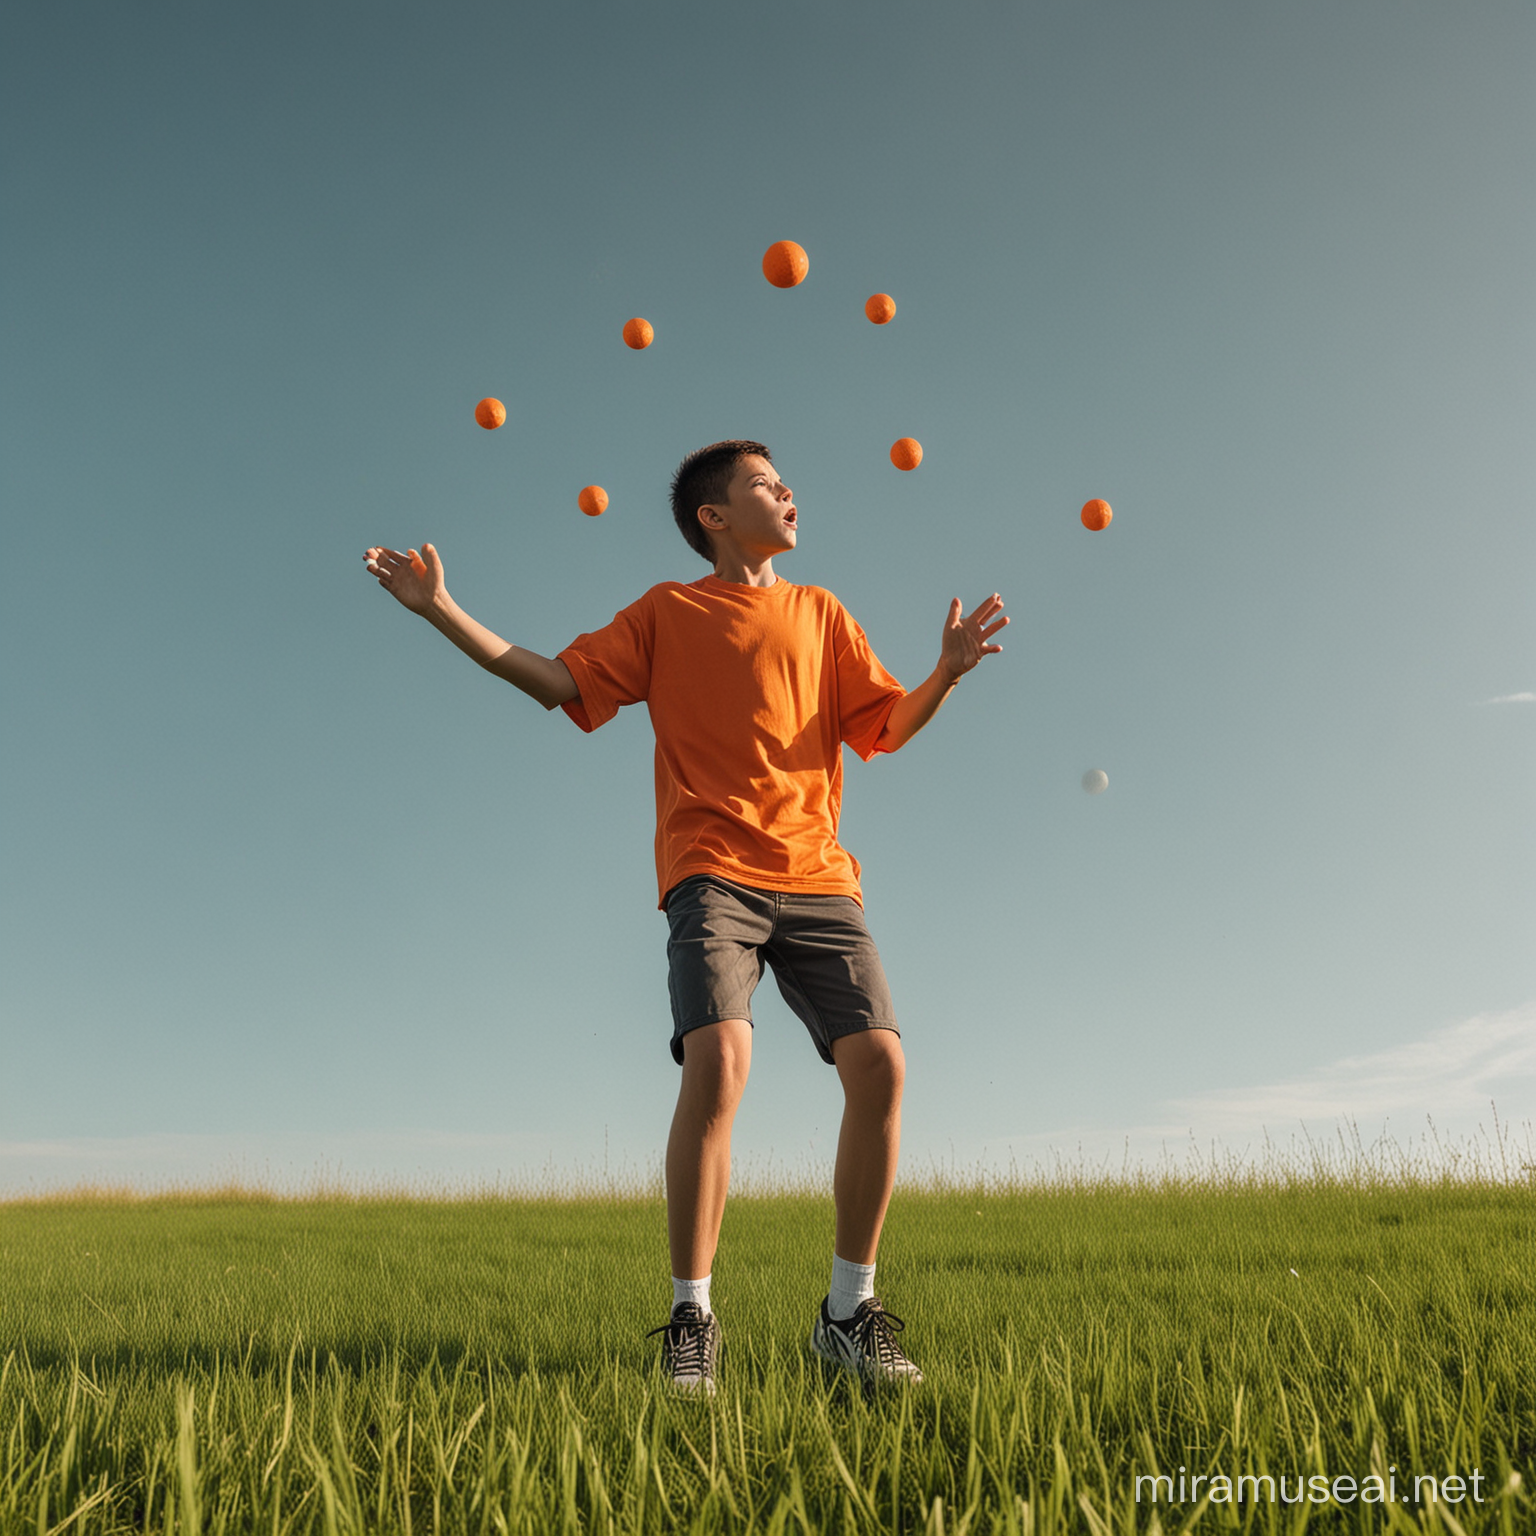 A vector boy in an orange shirt is juggling five balls in a grassy field.